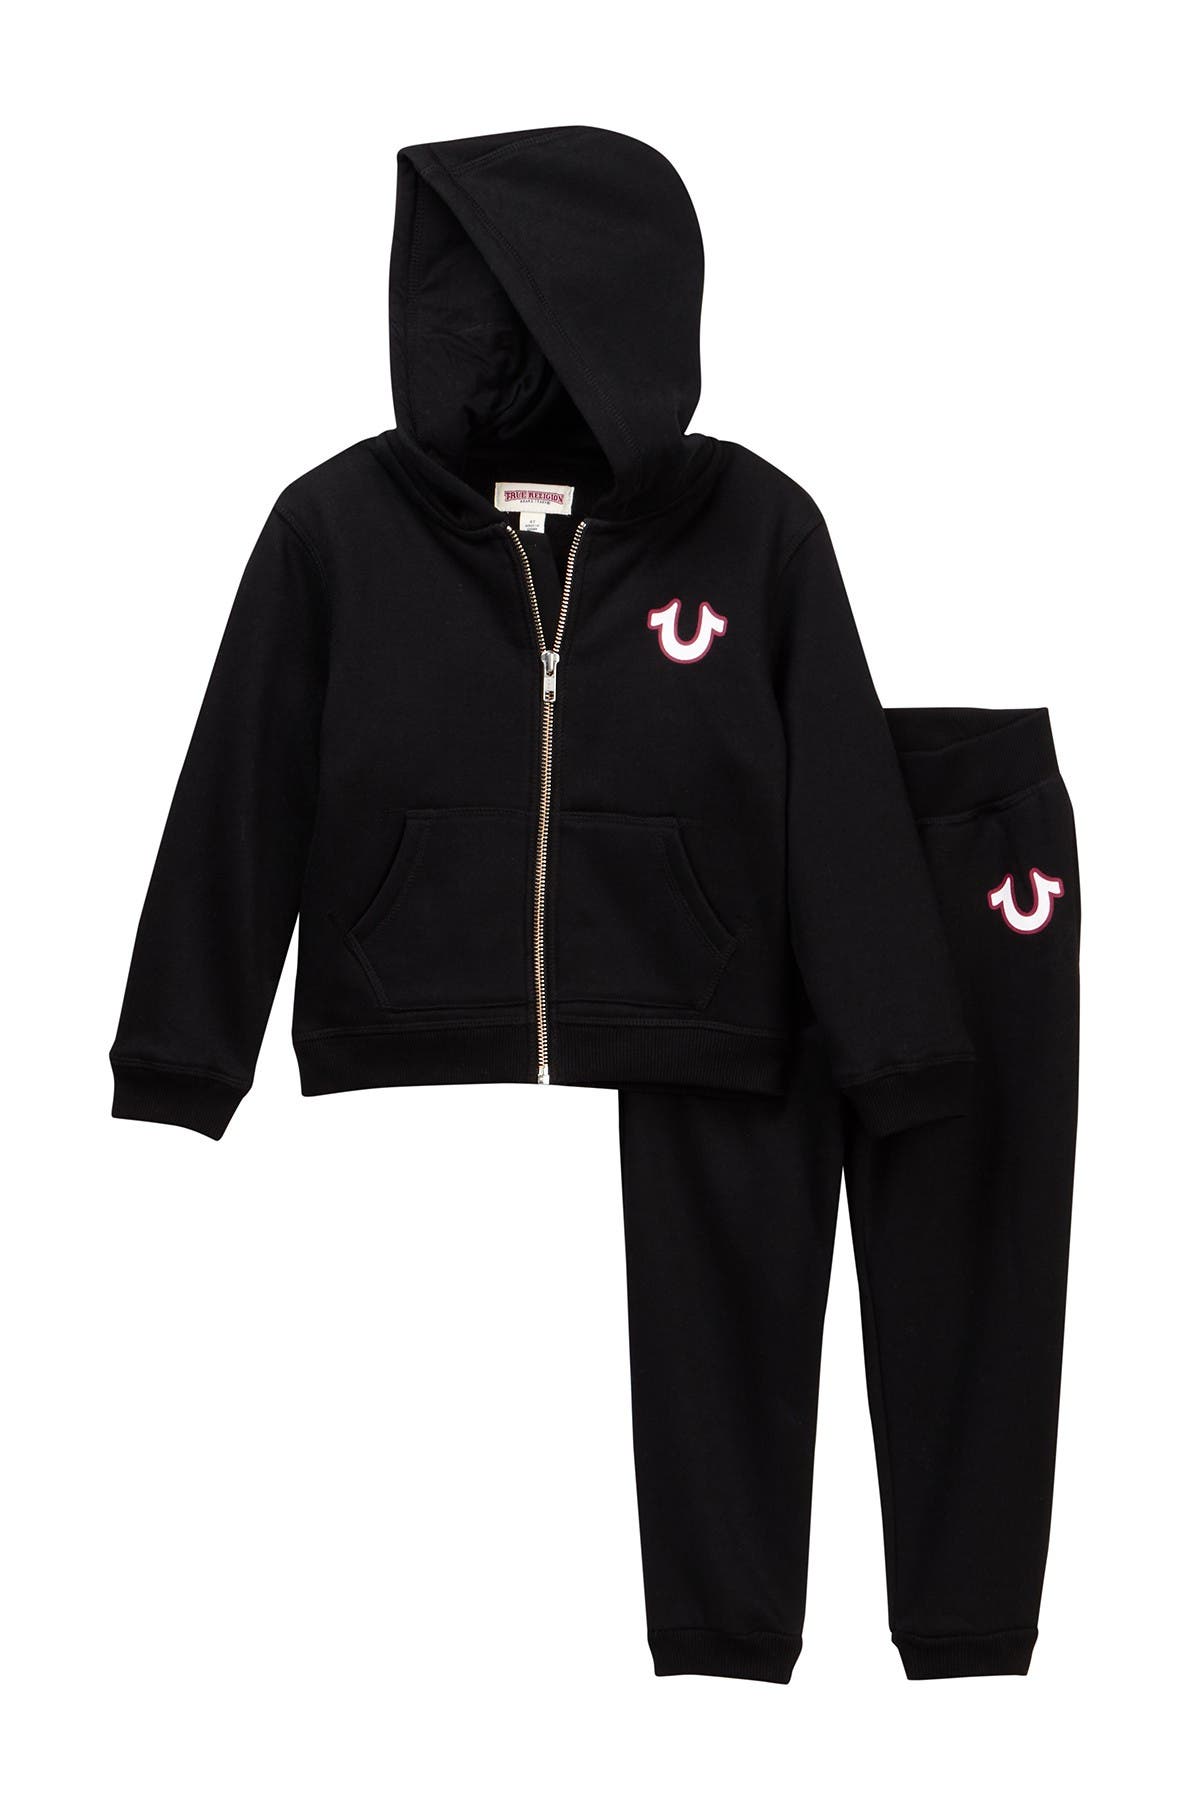 true religion hoodie and sweatpants